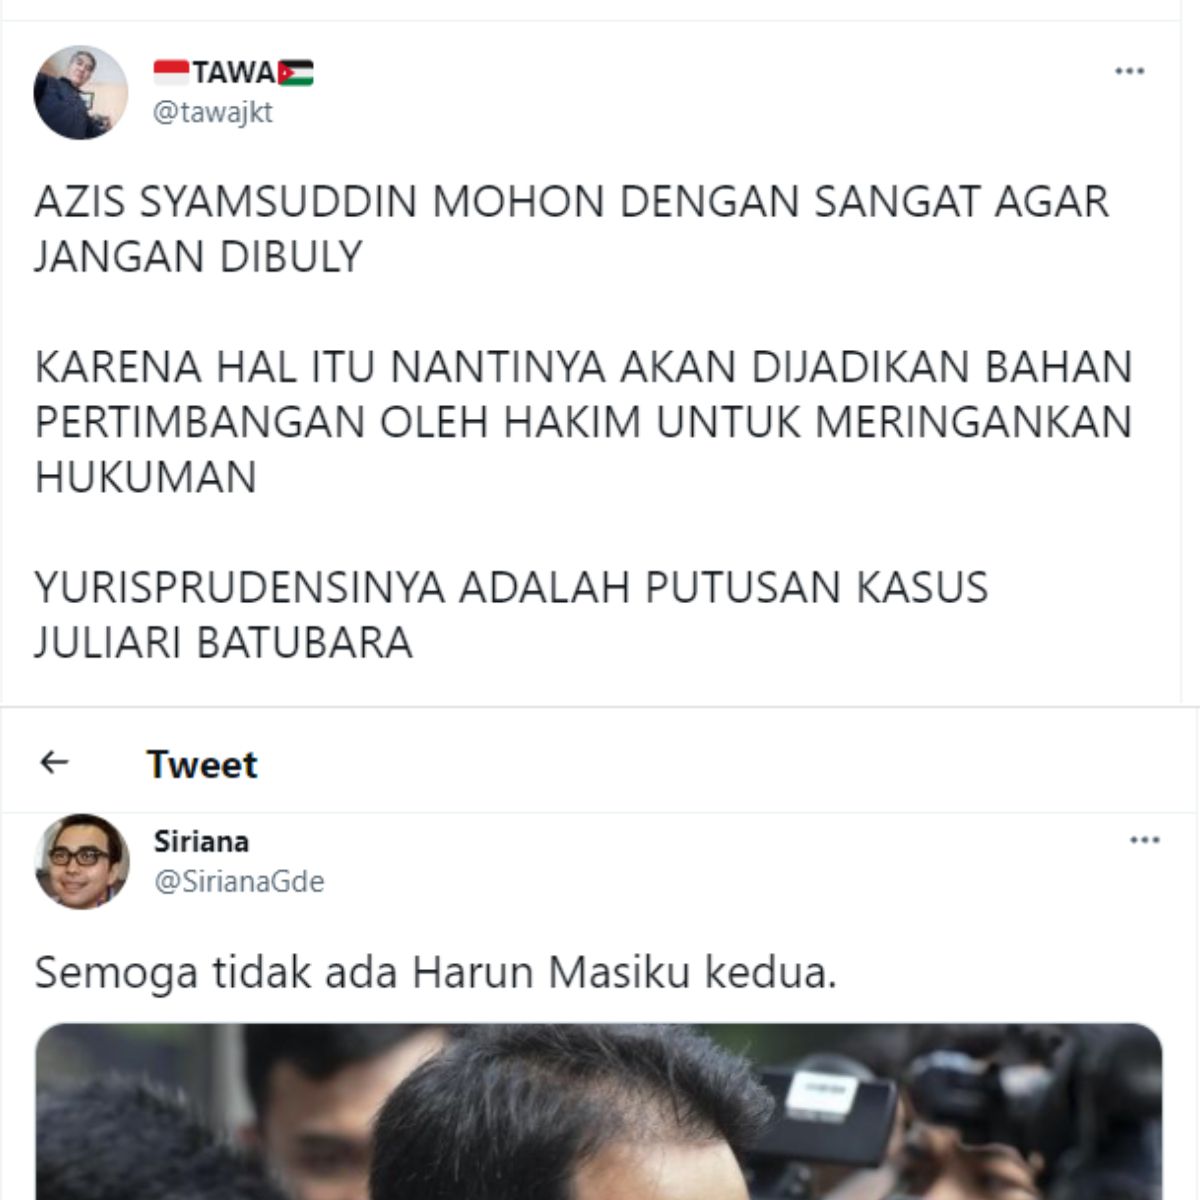 Hebohnya penangkapan Azis Syamsuddin ini pun menyebabkan namanya trending di Twitter dan menuai berbagai komentar.